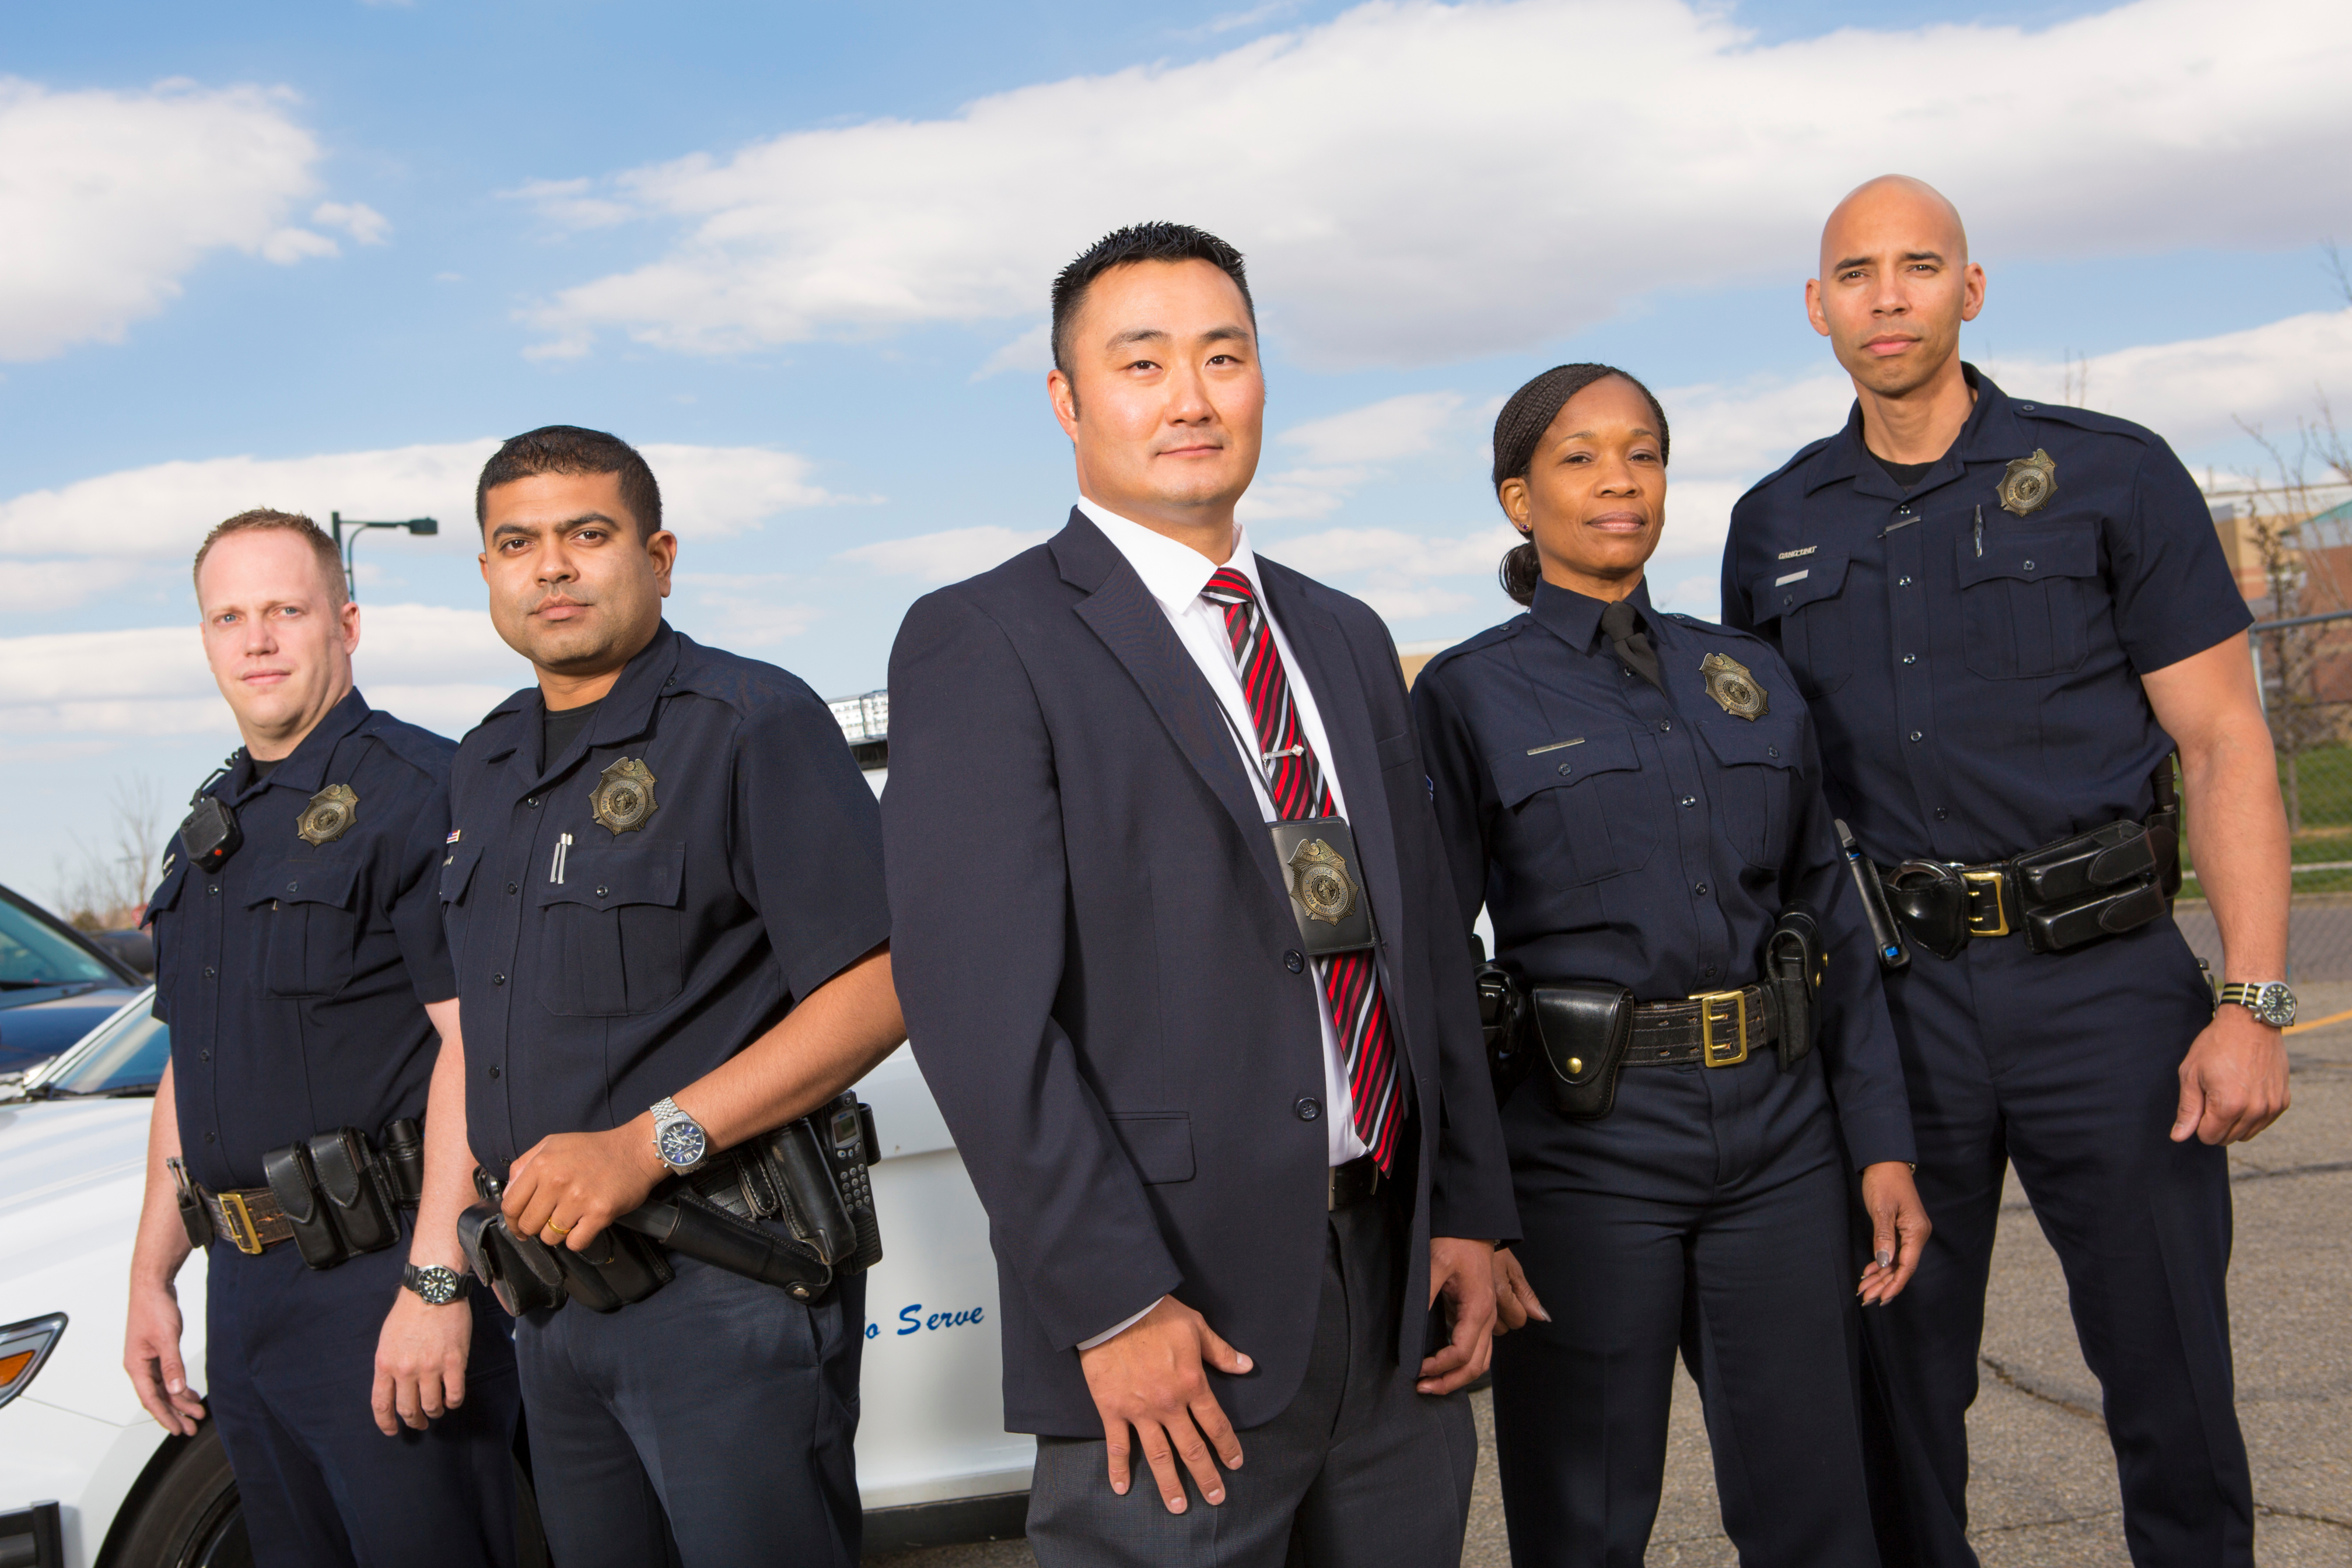 Five diverse enforcement officers stand together